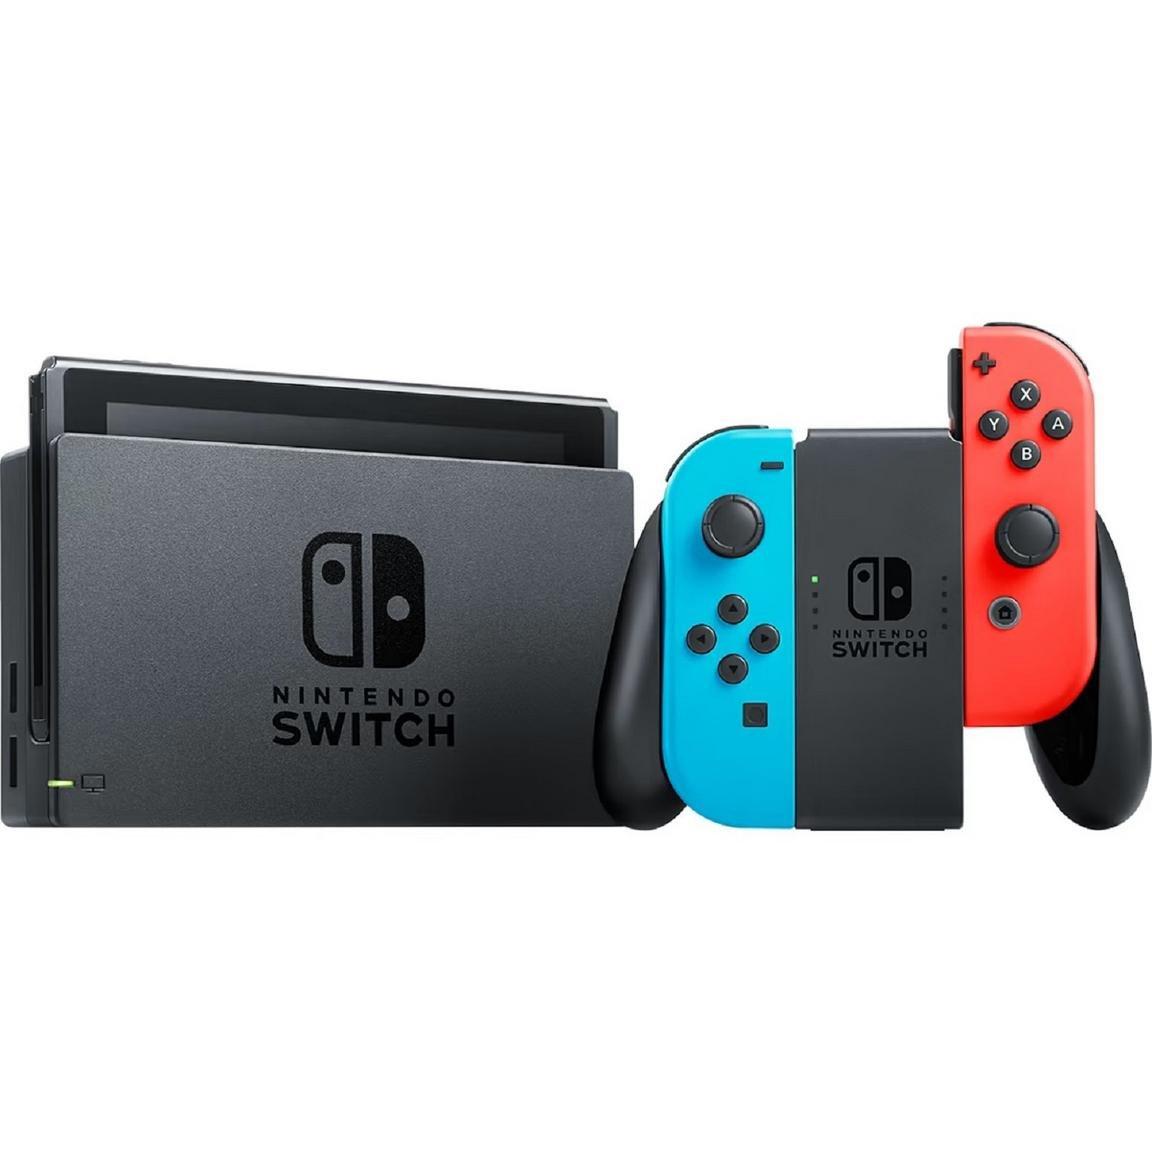 Nintendo Switch With Neon Joy Cons Gamer Bundle Nintendo Switch